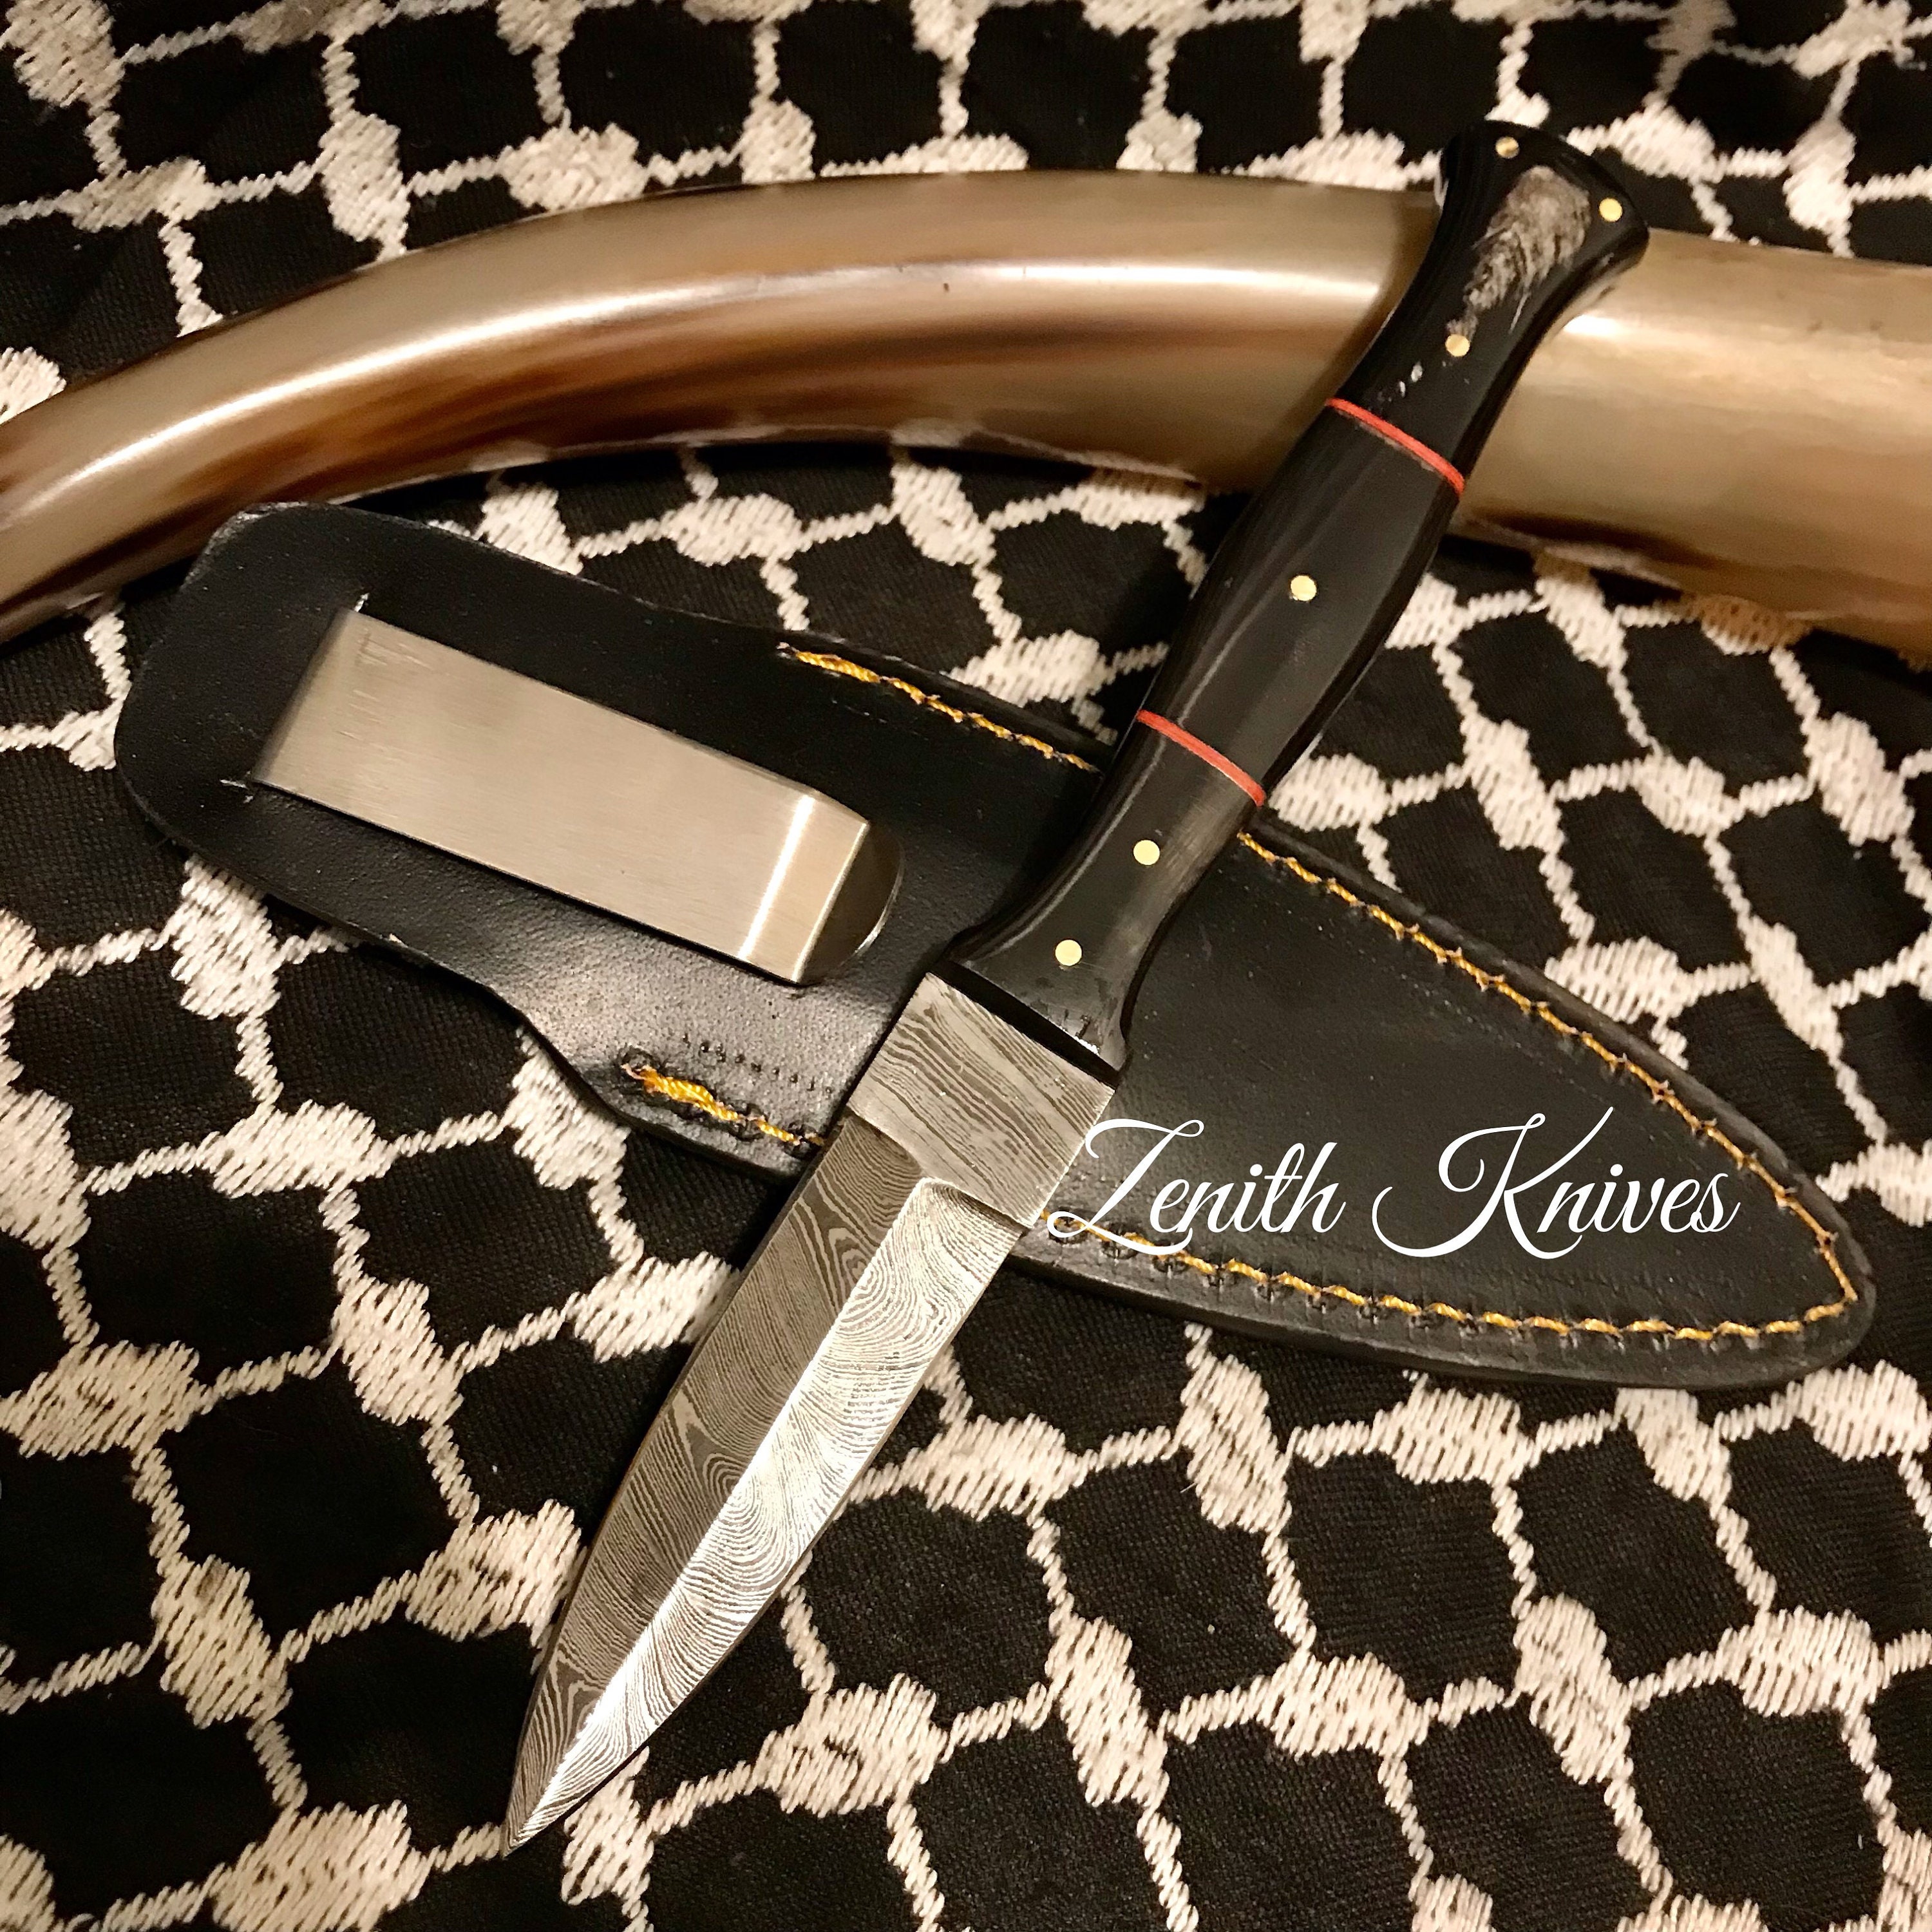 Custom USA Black Leather Fixed 4 Blade Dagger Knife Boot Belt